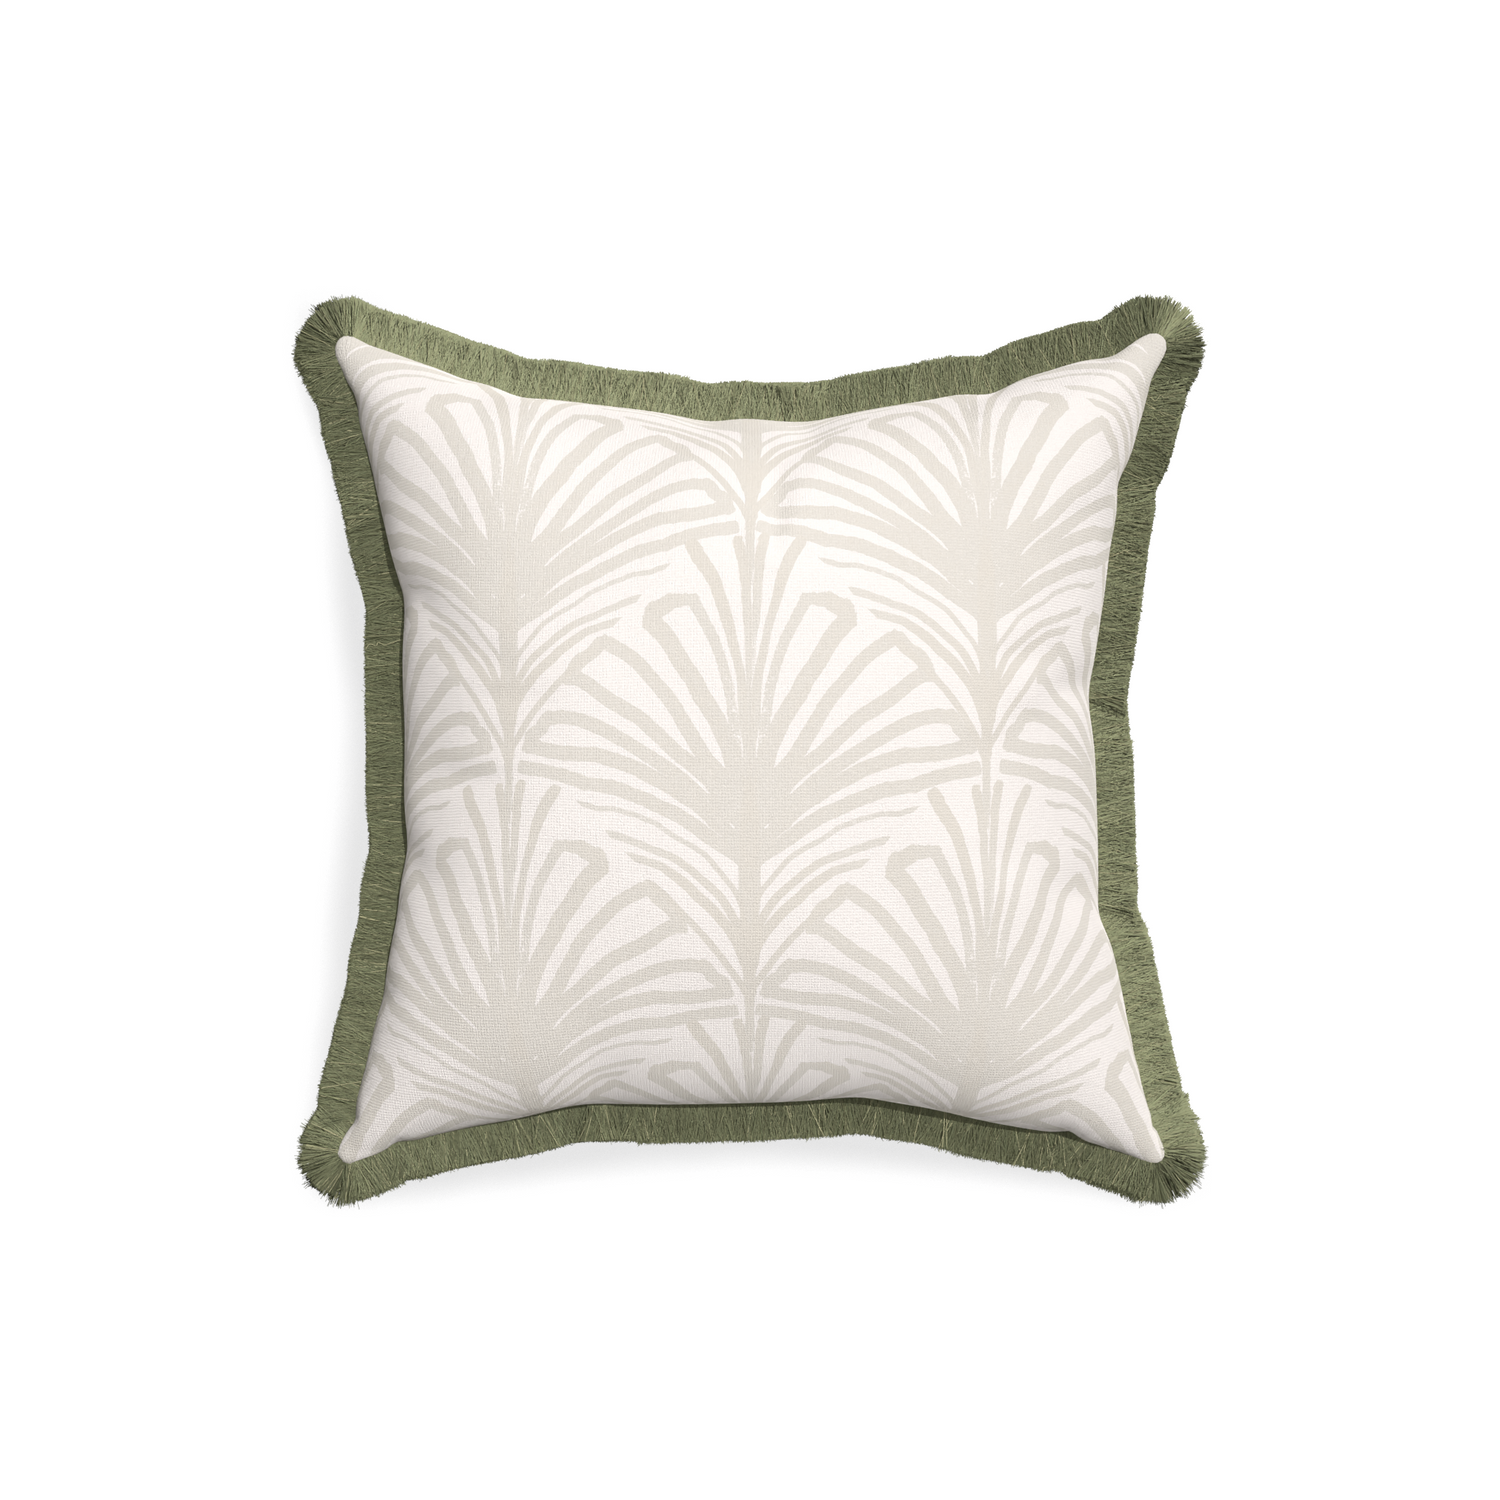 18-square suzy sand custom pillow with sage fringe on white background